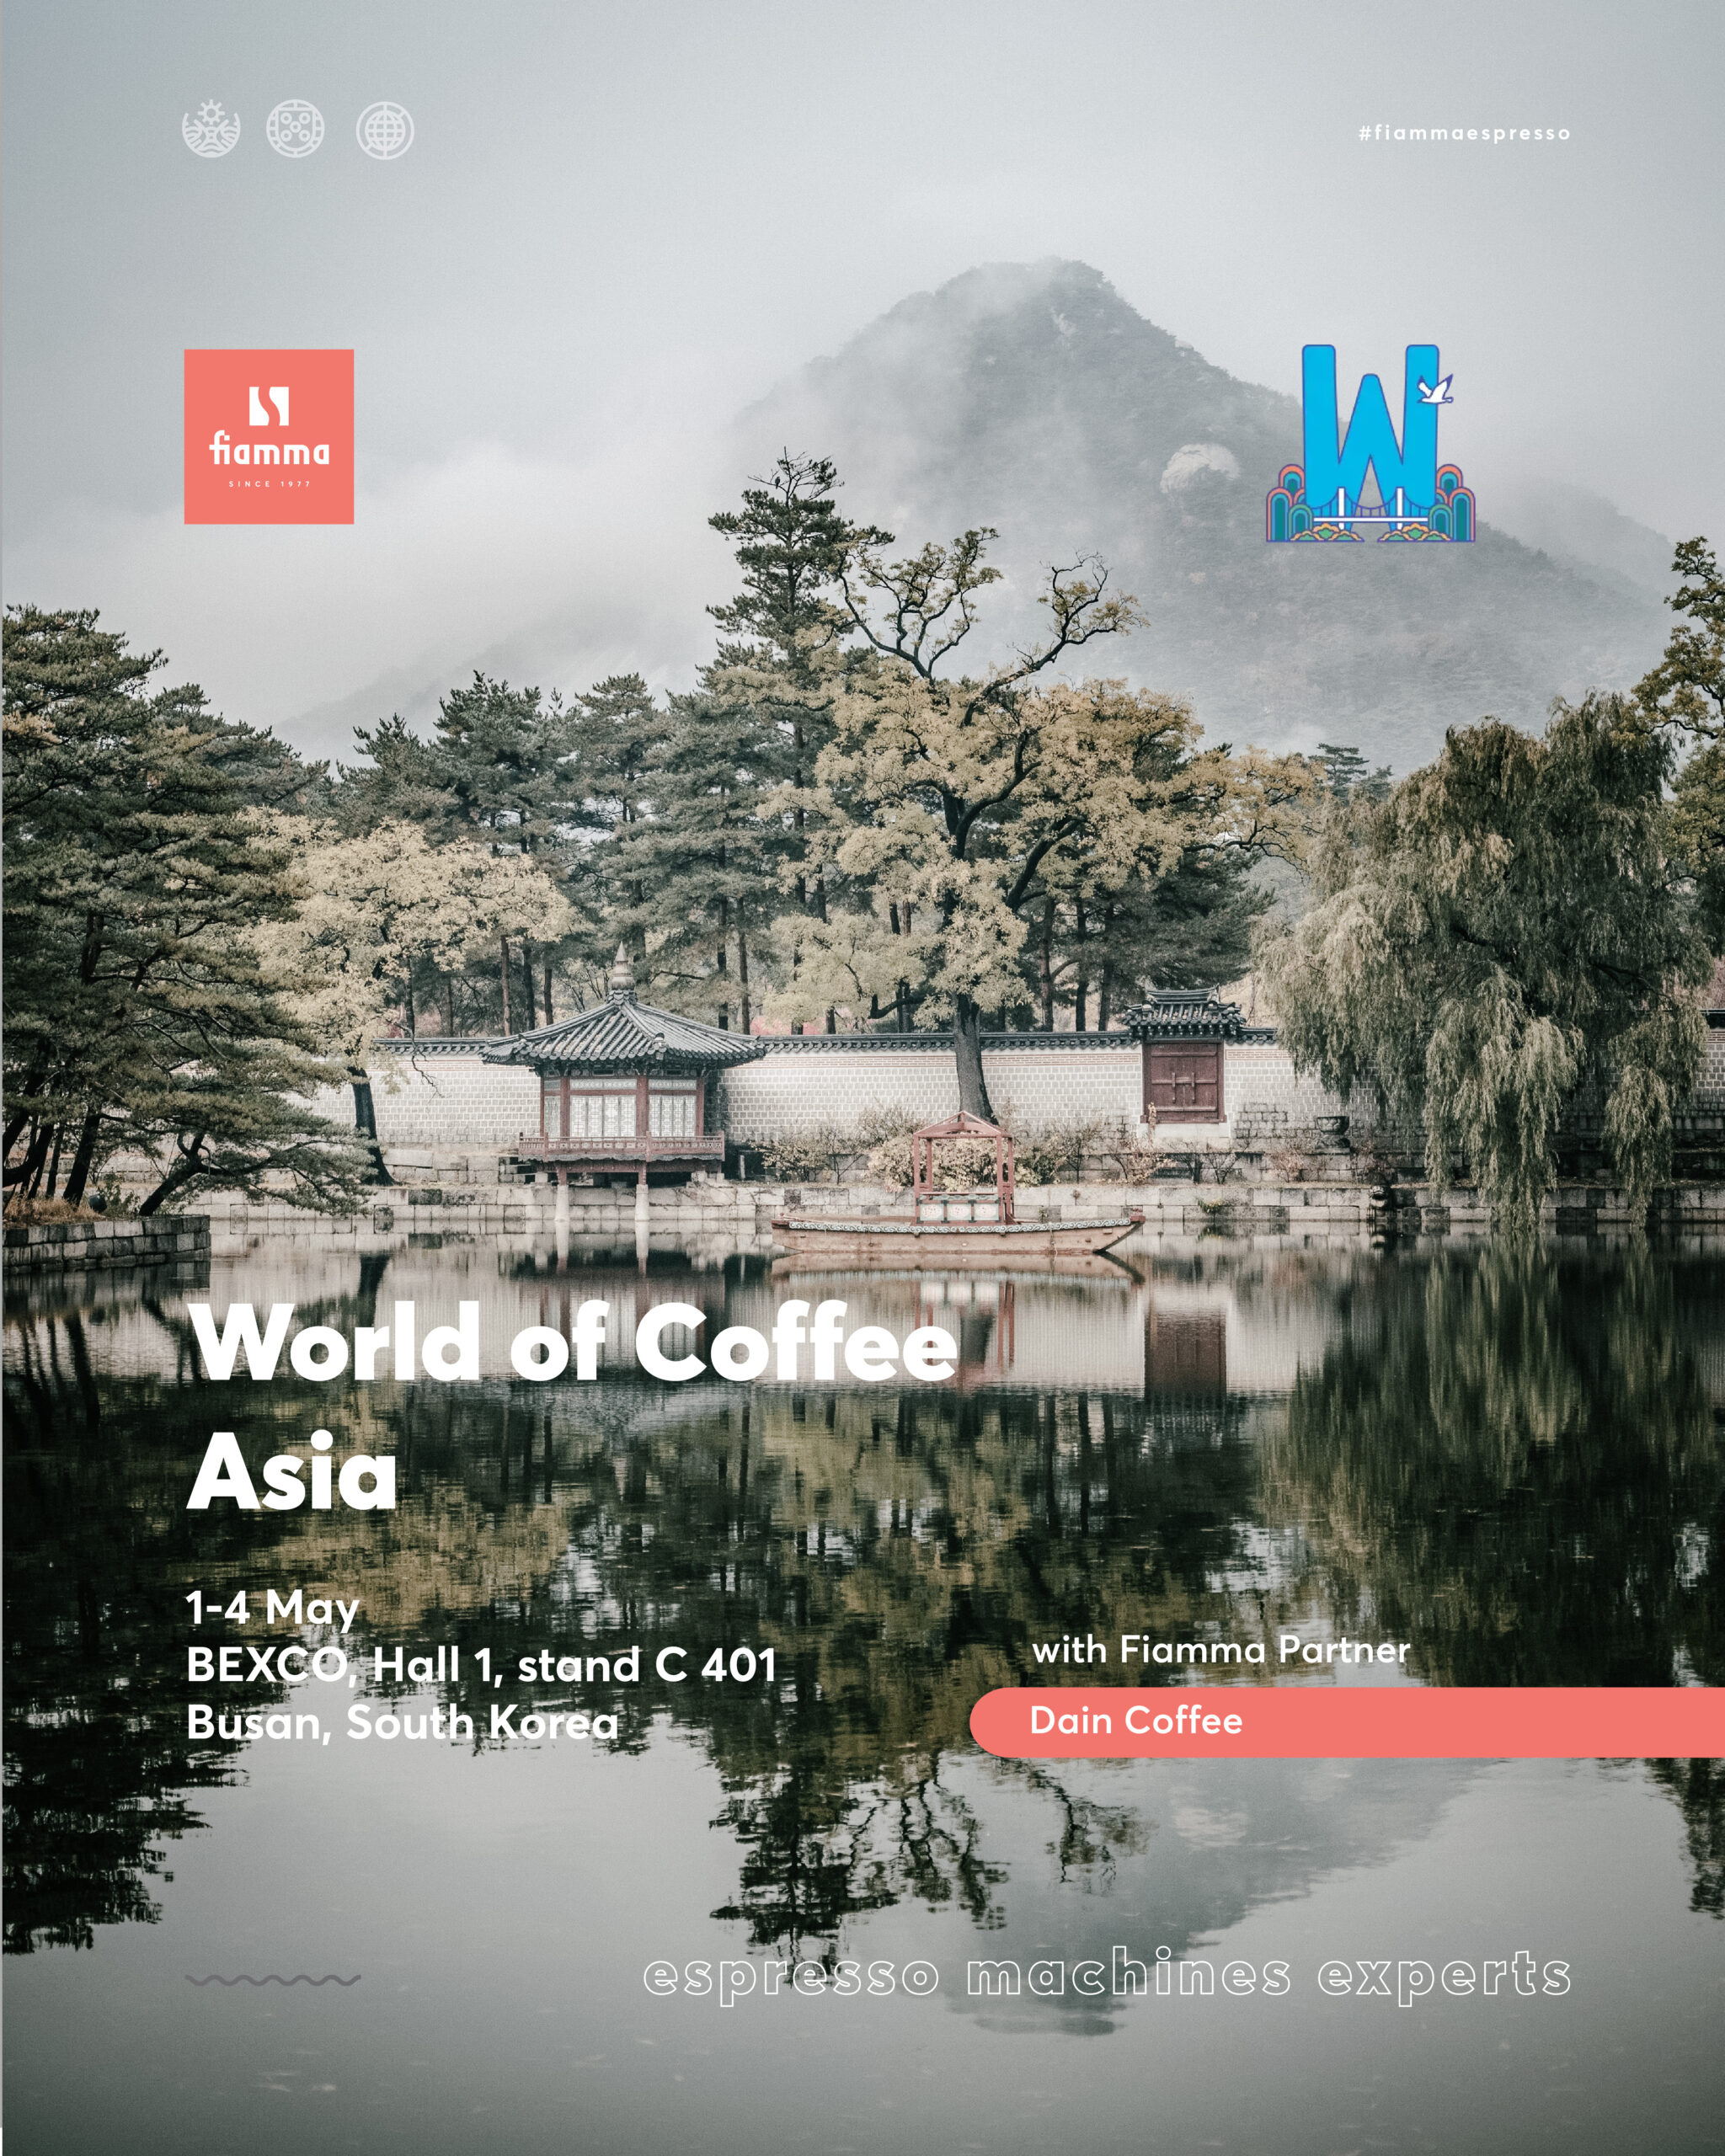 Fiamma Espresso at World of Coffee Asia in Busan, South Korea